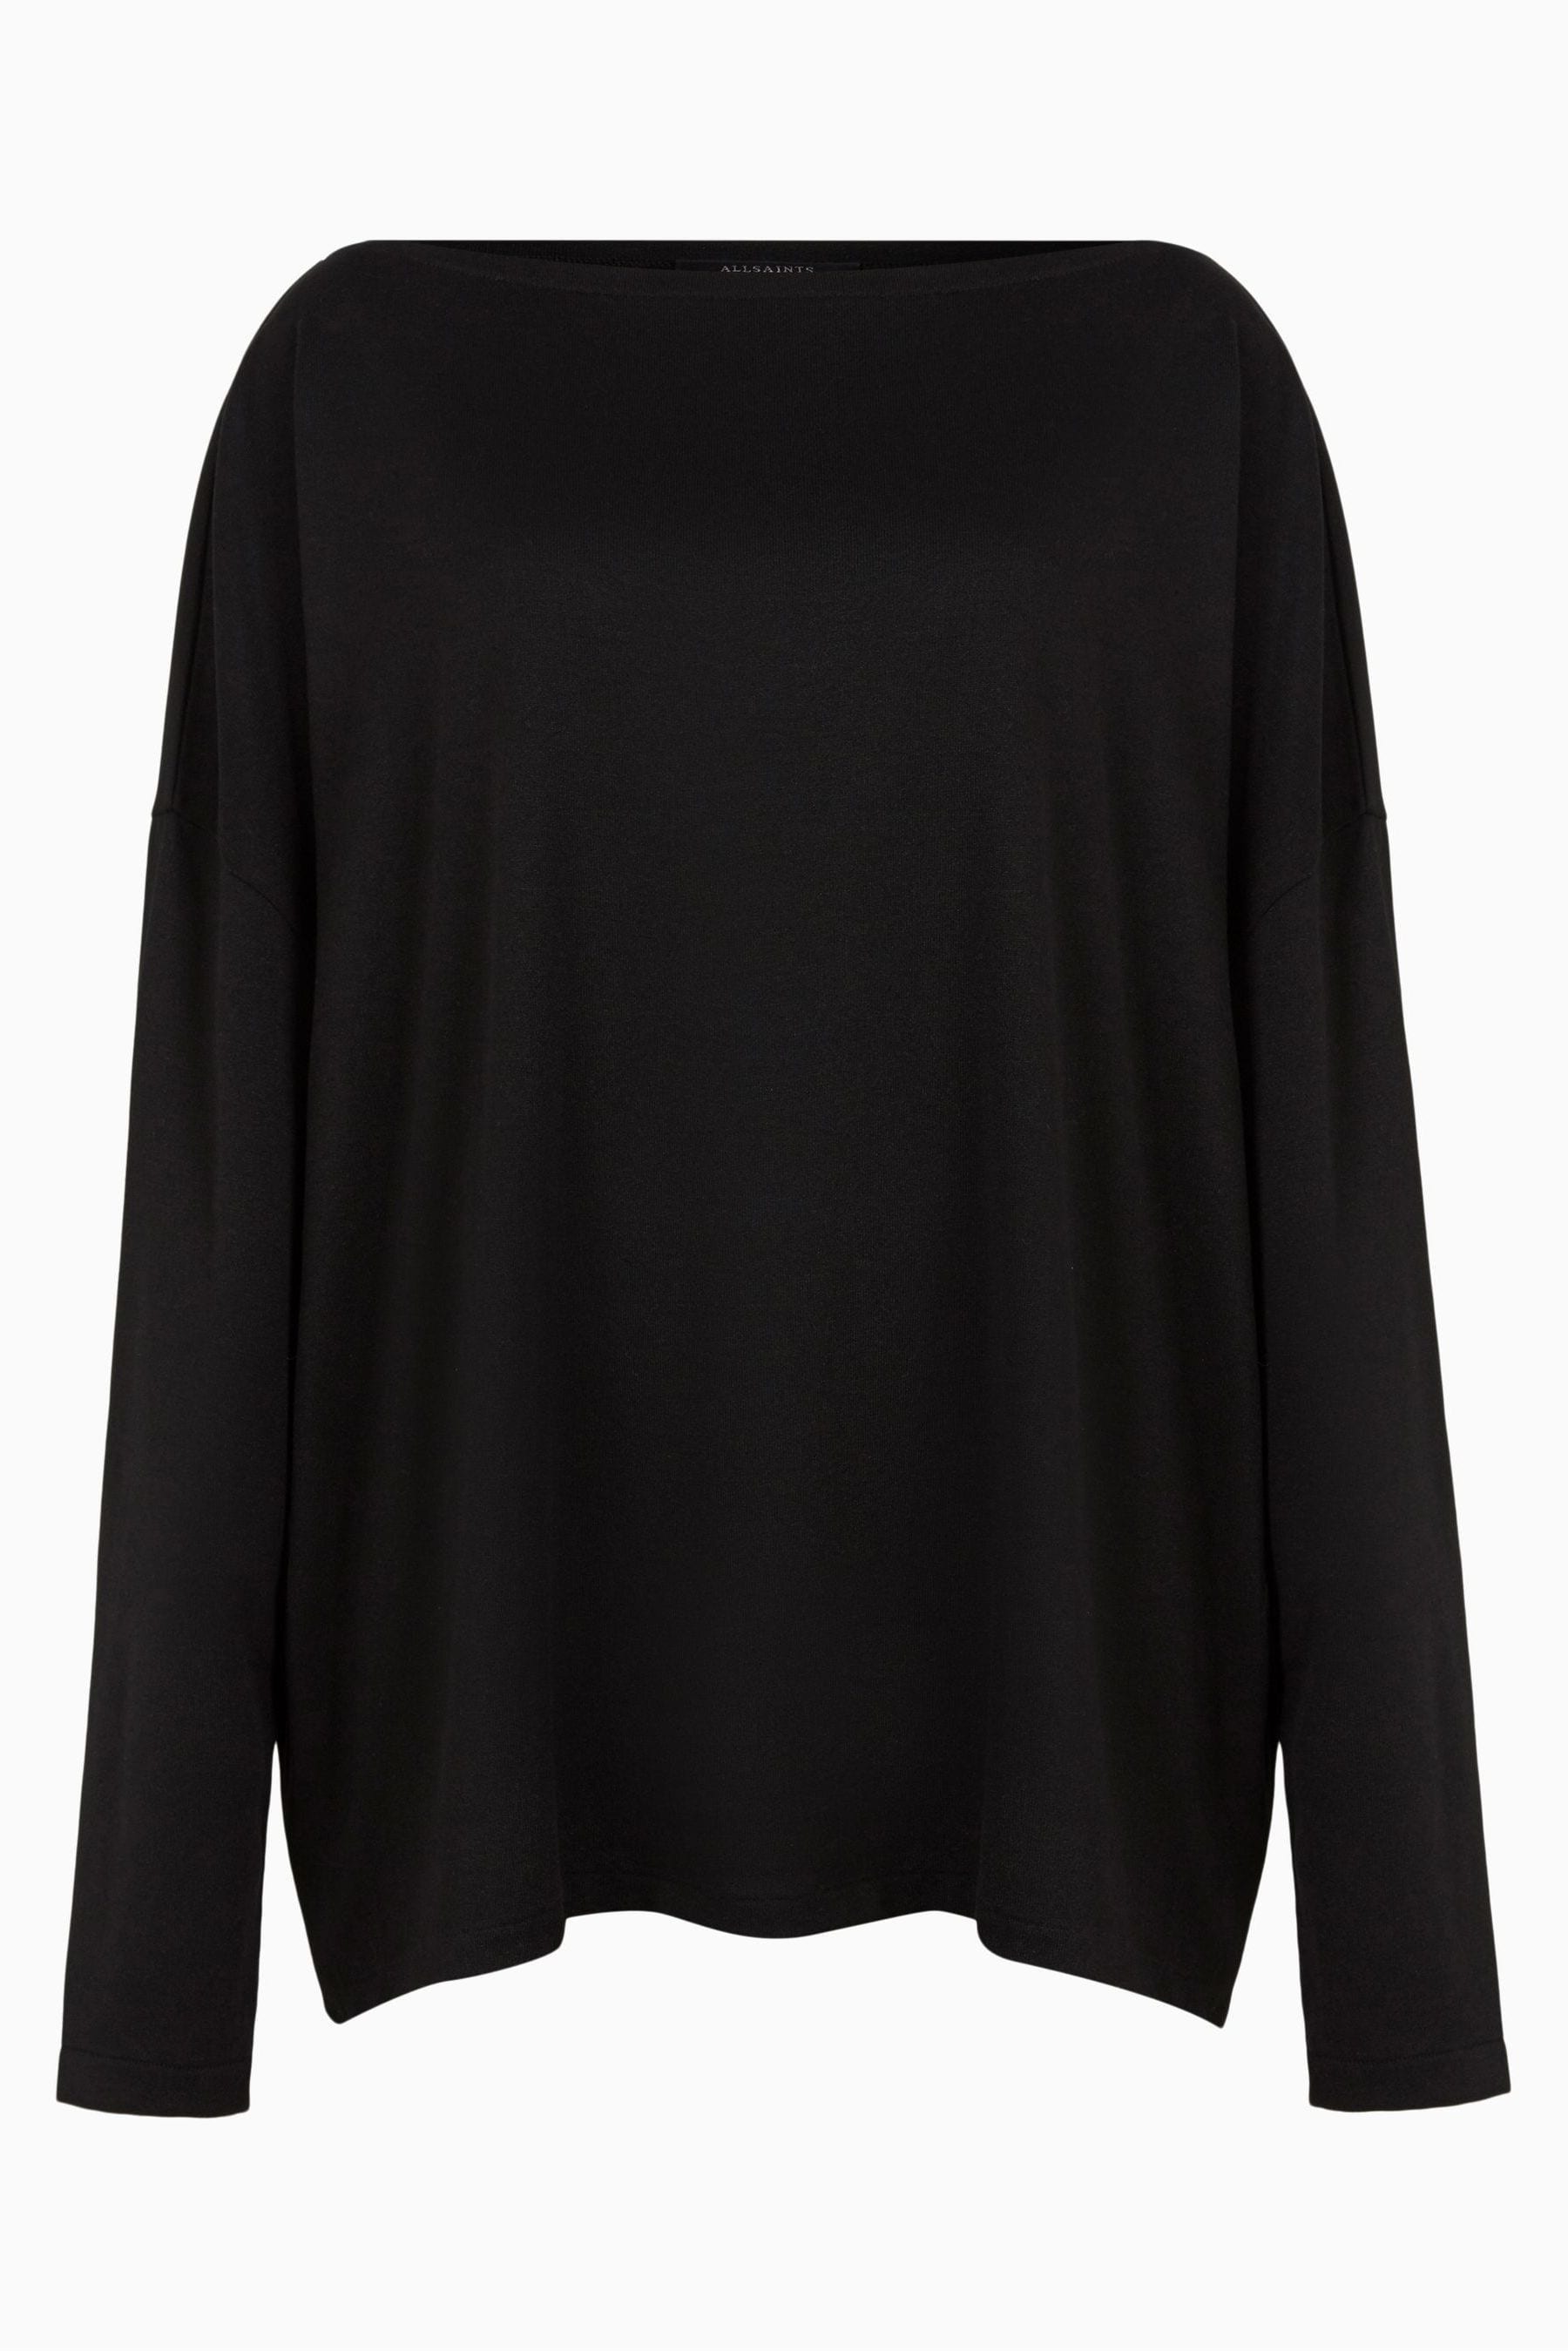 Buy AllSaints Black Off The Shoulder Rita Top from the Next UK online shop